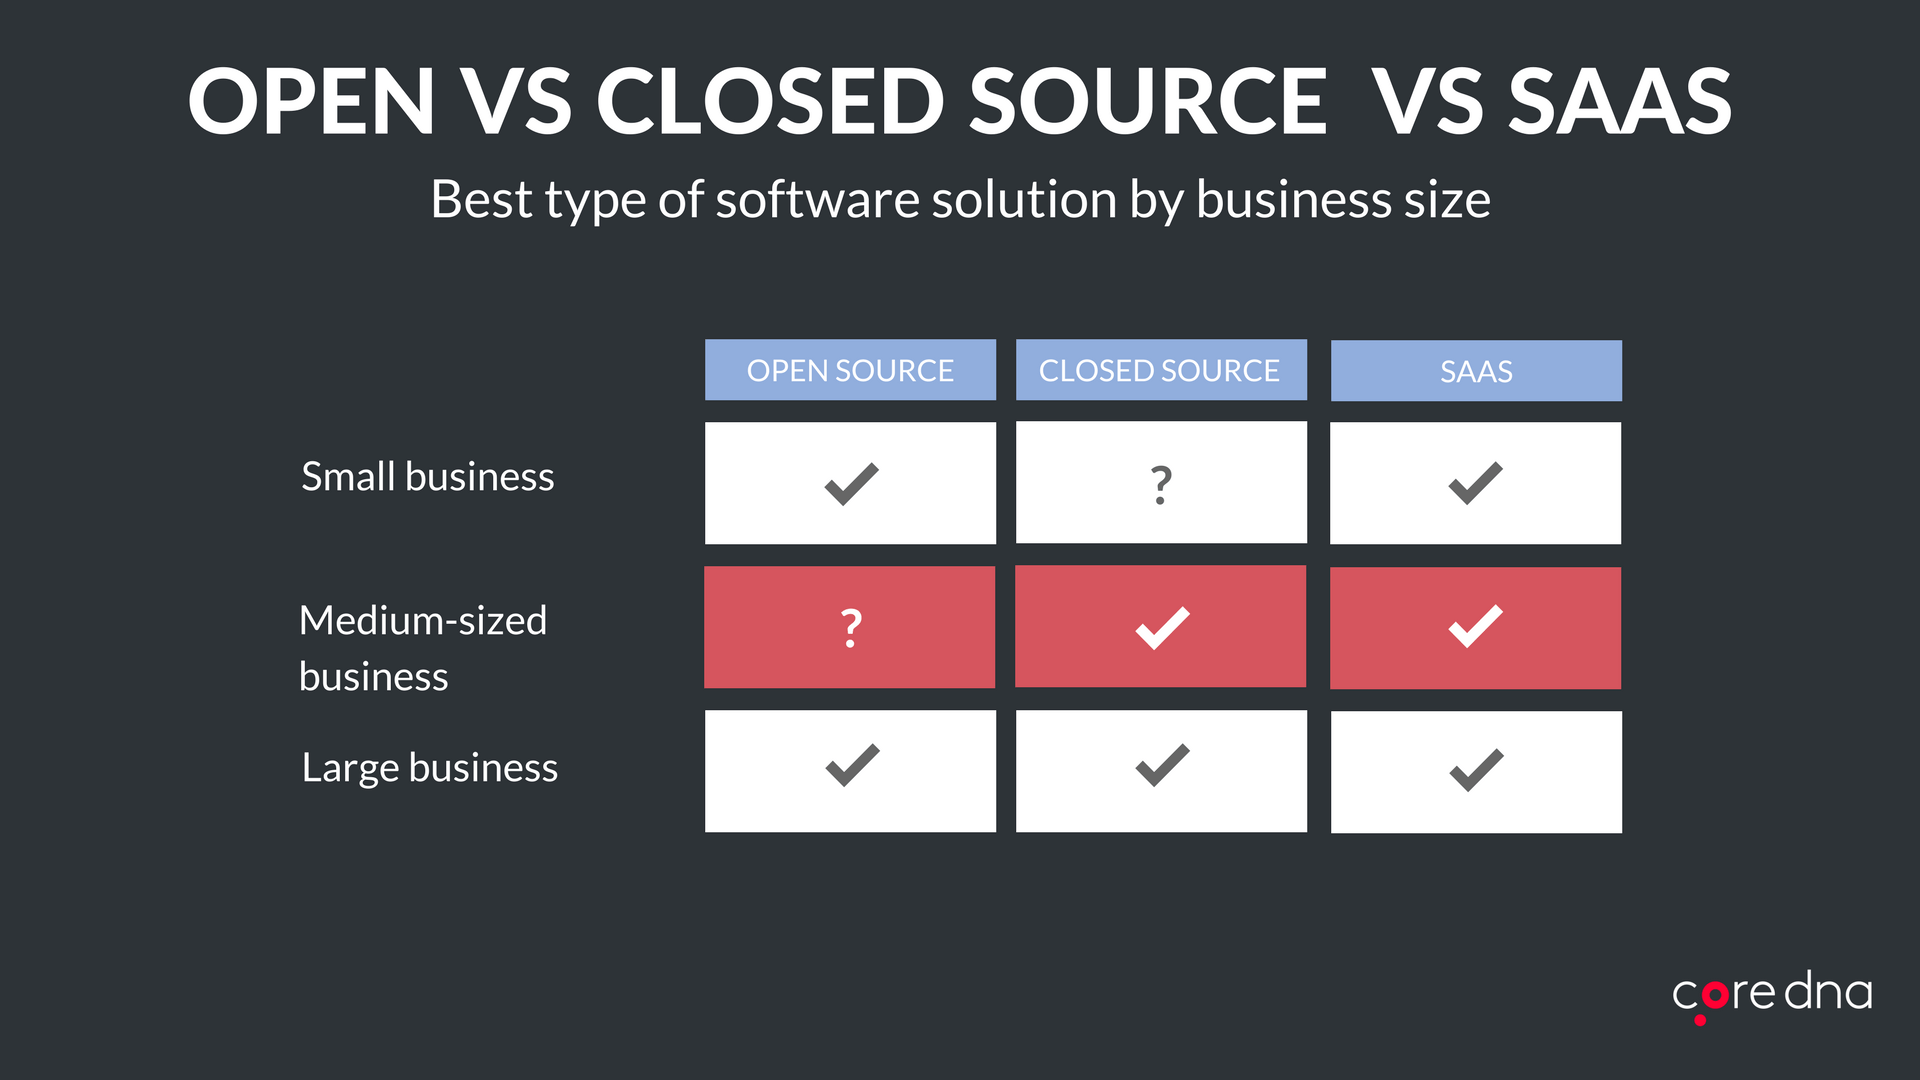 Open source vs closed source vs SaaS